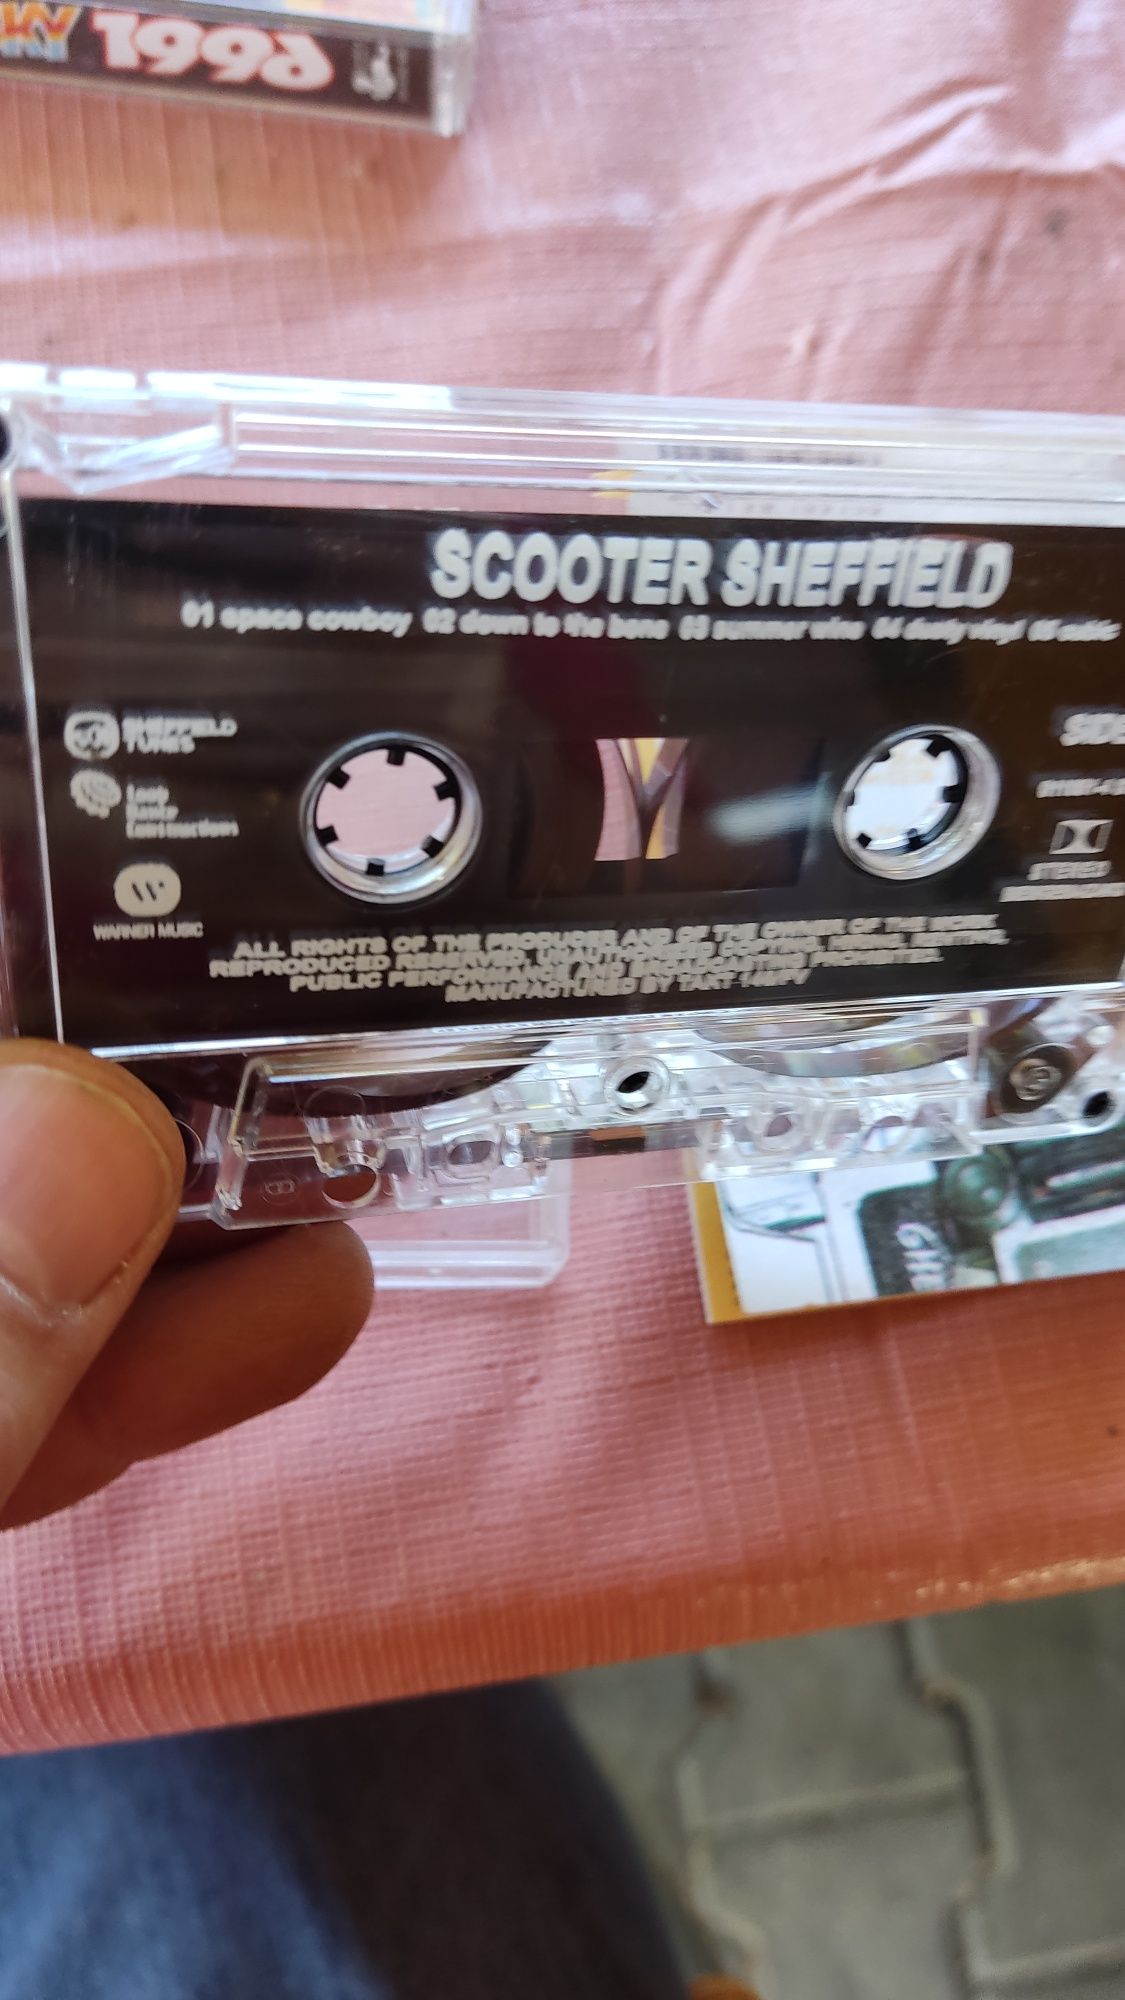 Scooter Sheffield kaseta audio